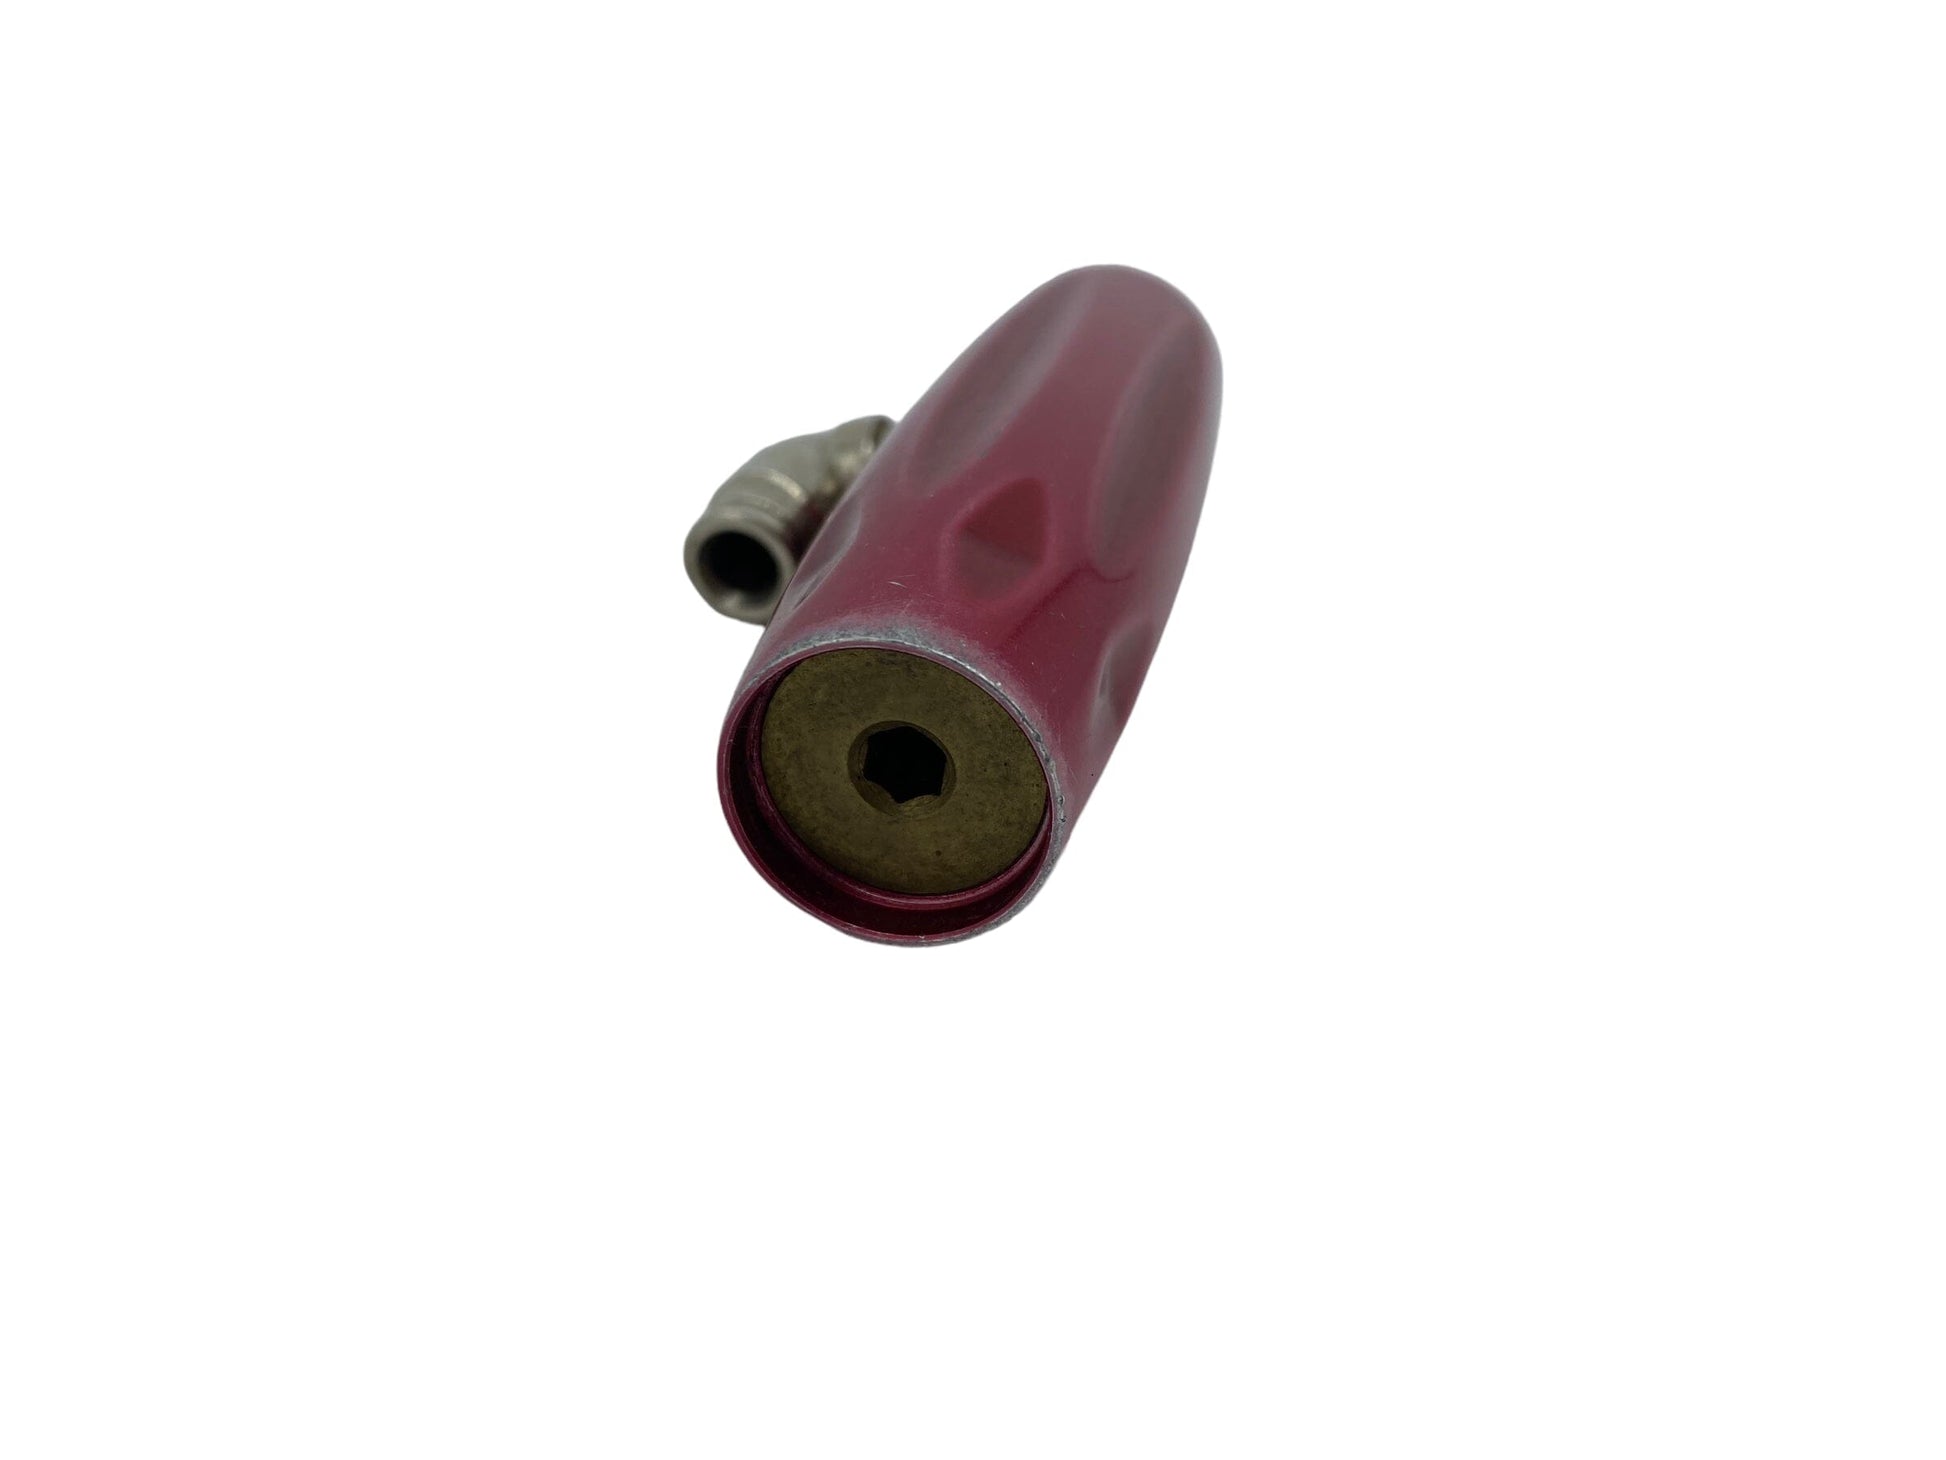 Used Smart Parts Shocker SFT TONTON Regulator Paintball Gun from CPXBrosPaintball Buy/Sell/Trade Paintball Markers, Paintball Hoppers, Paintball Masks, and Hormesis Headbands